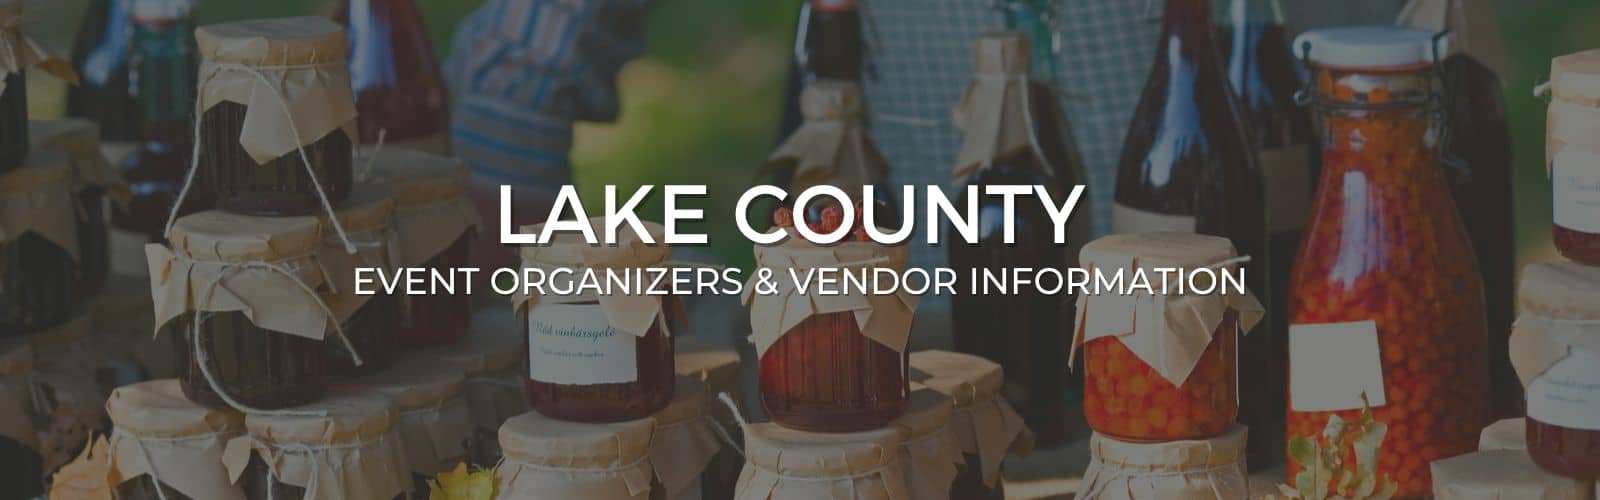 Lake County Event Vendor Information